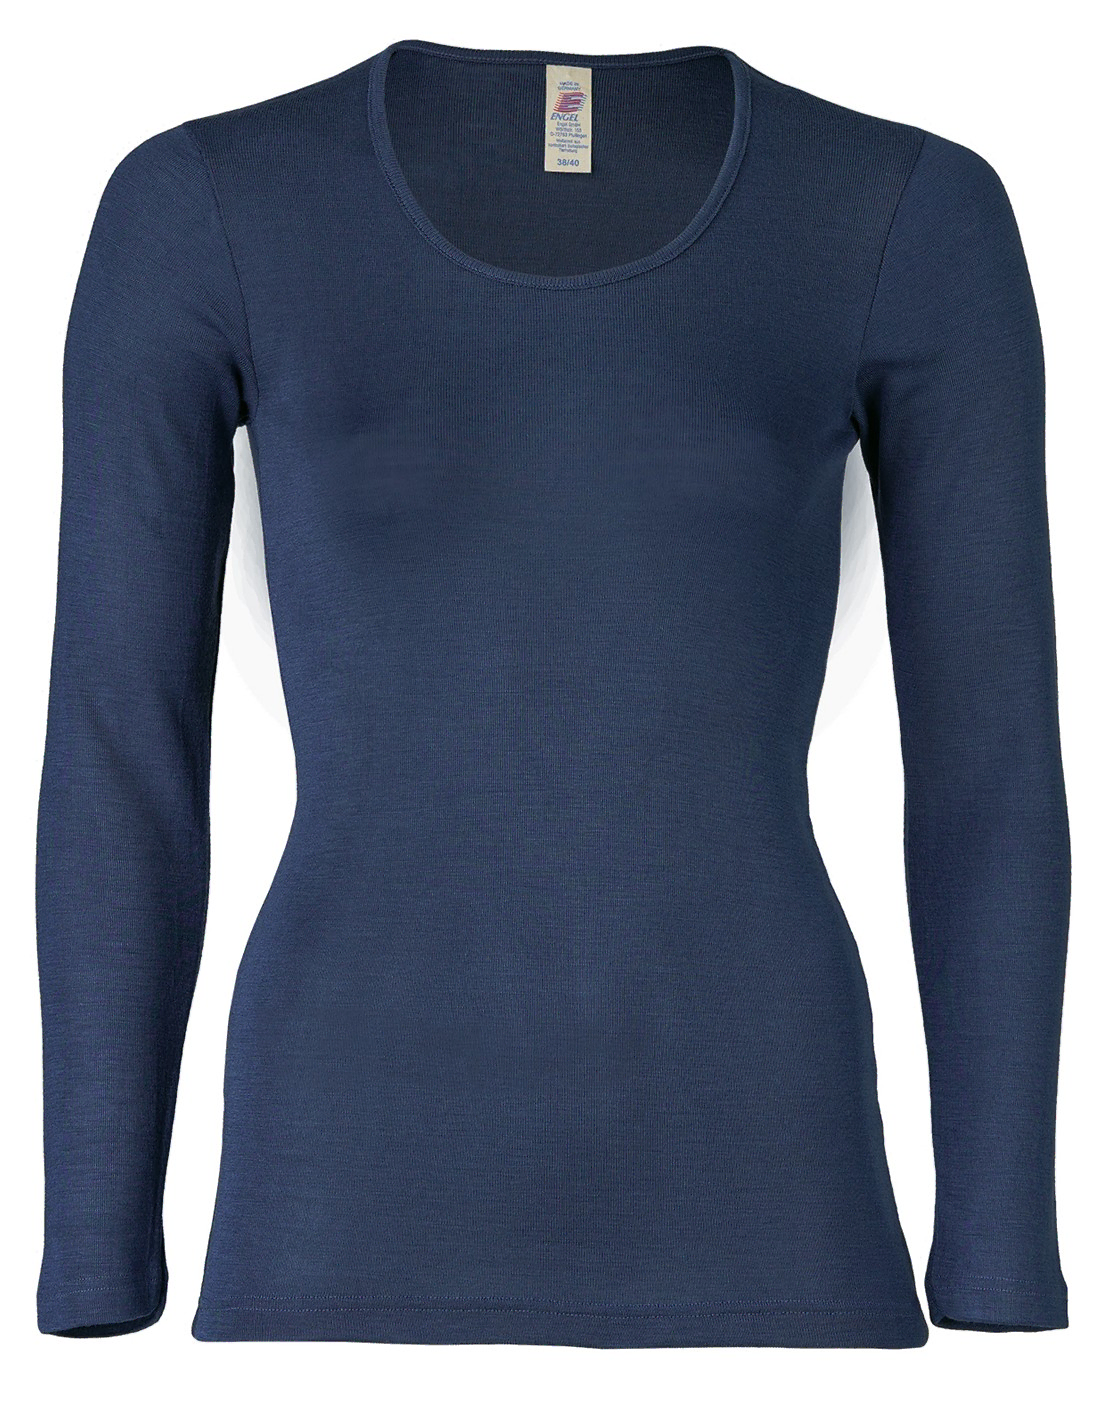 Image of Dames Shirt Lange Mouw Zijde Wol Engel Natur, Kleur Navy blauw, Maat 46/48 - Extra Large